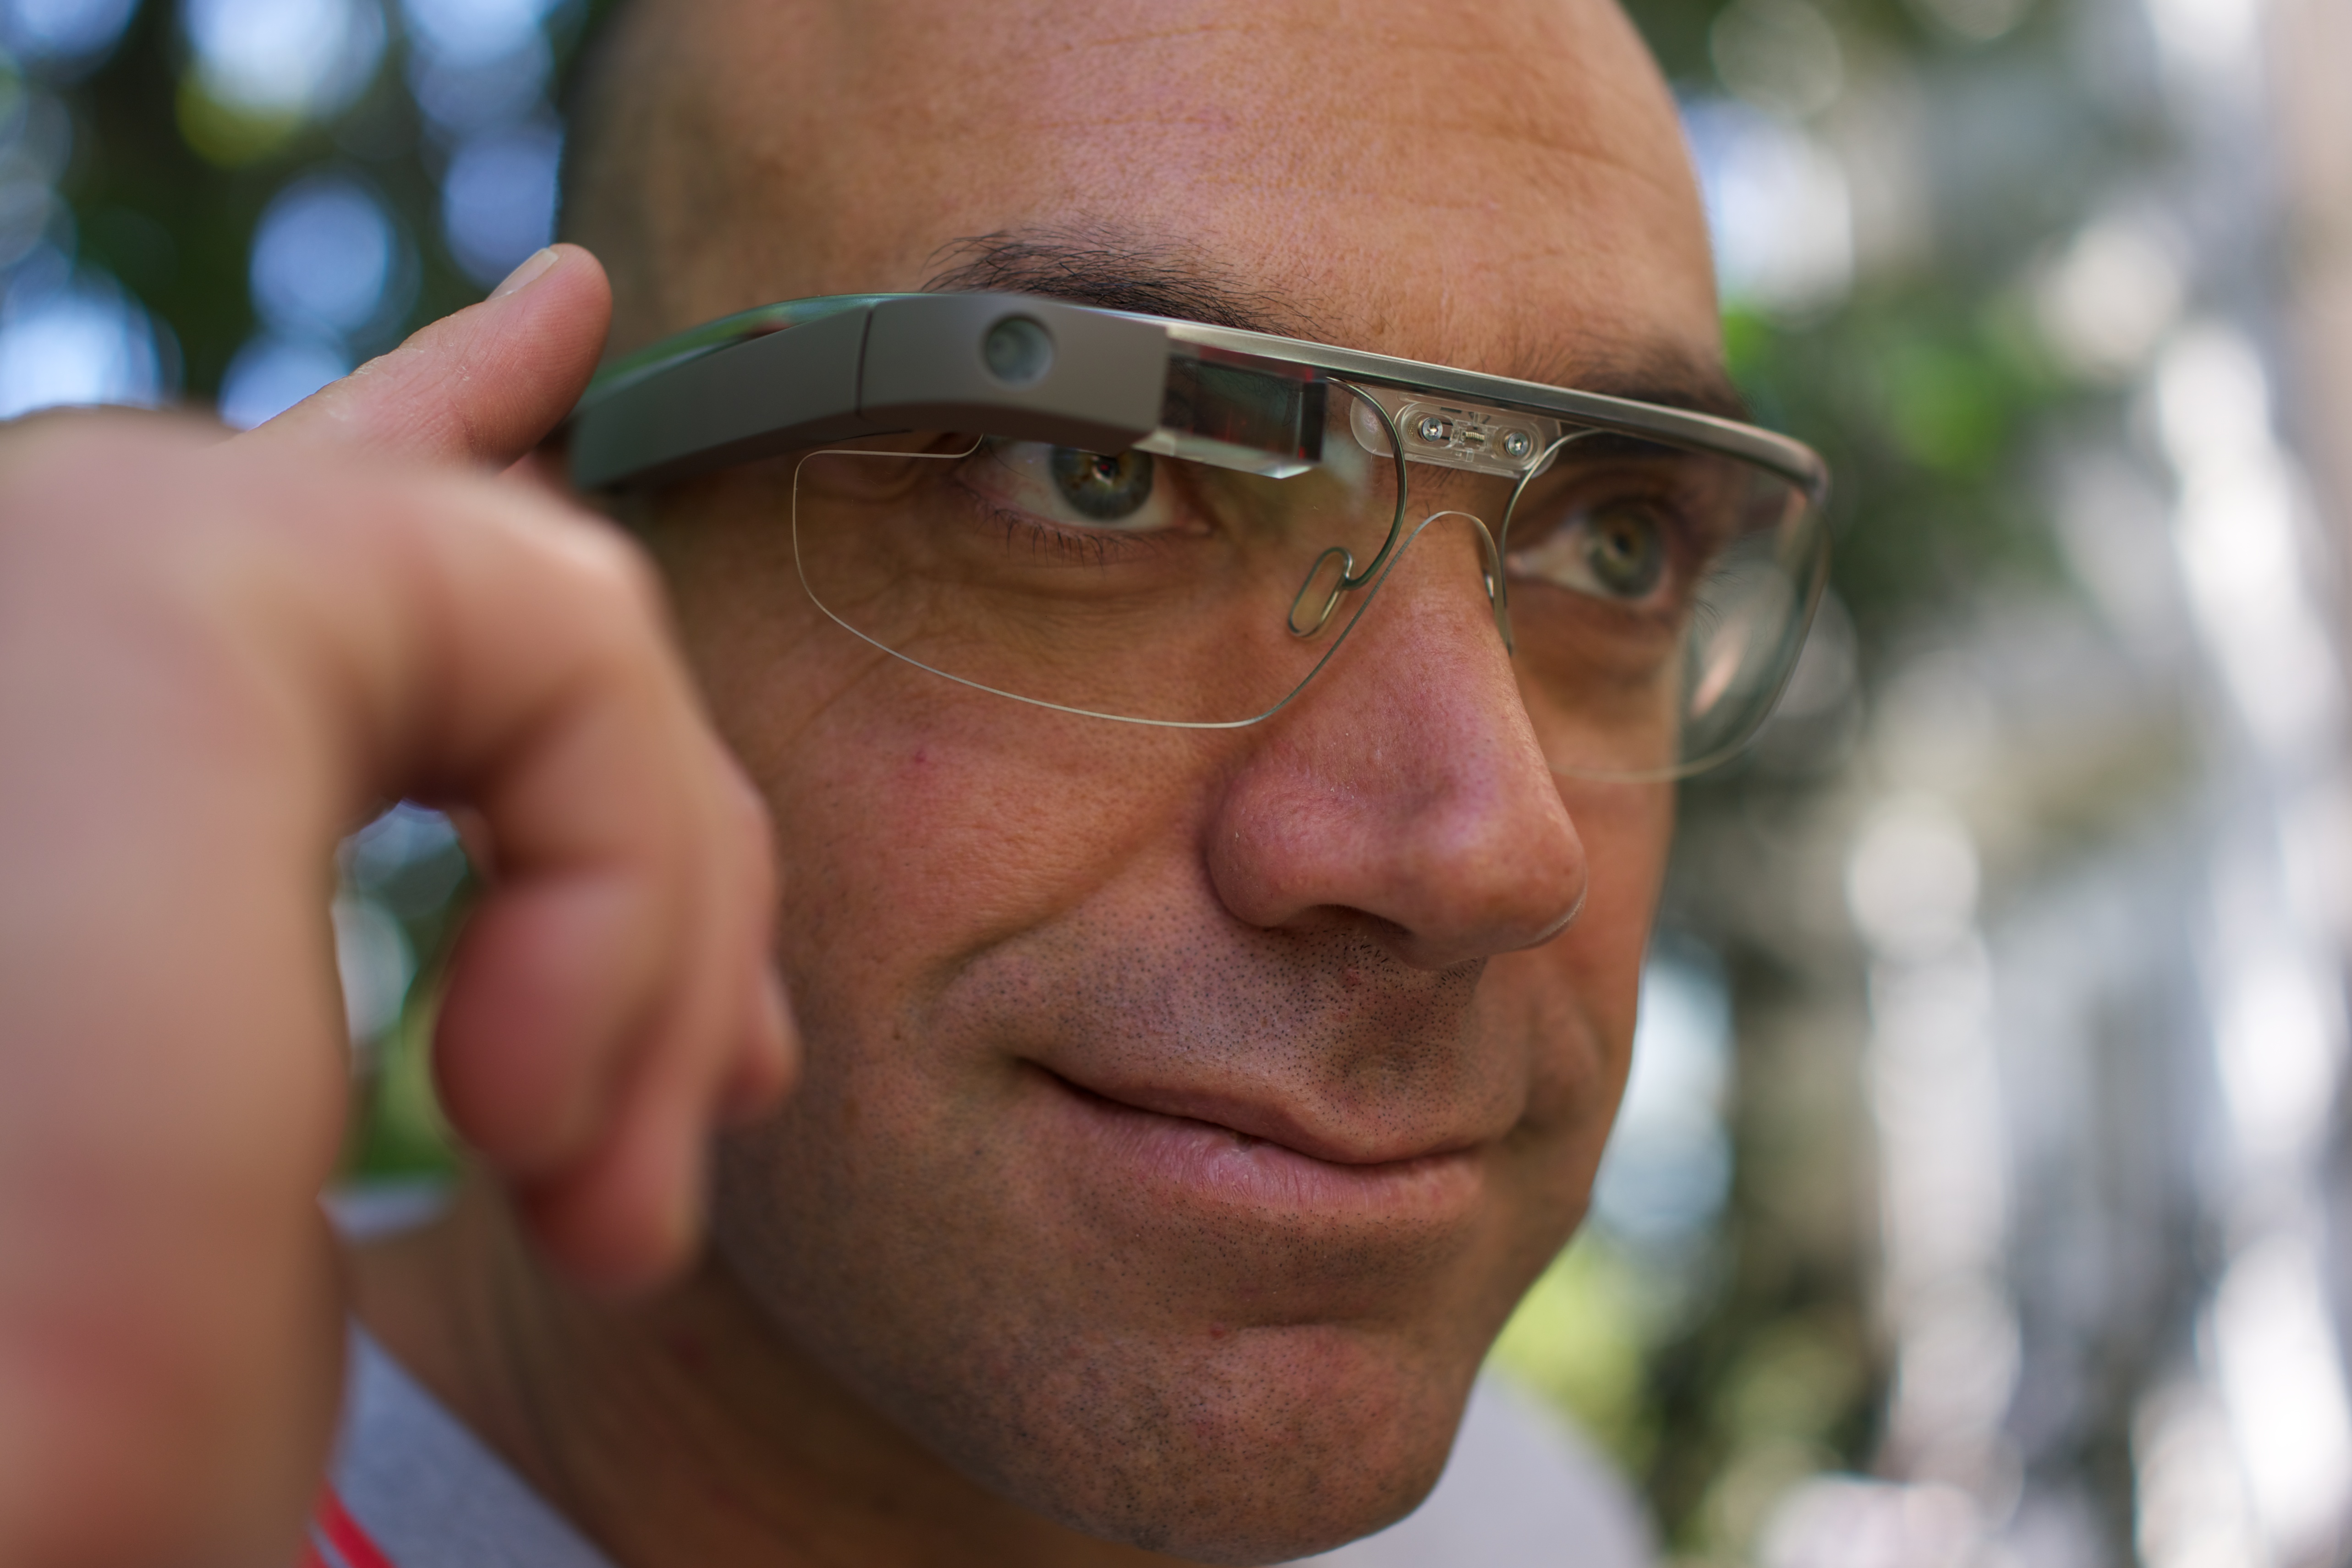 A man wearing Google Glasses